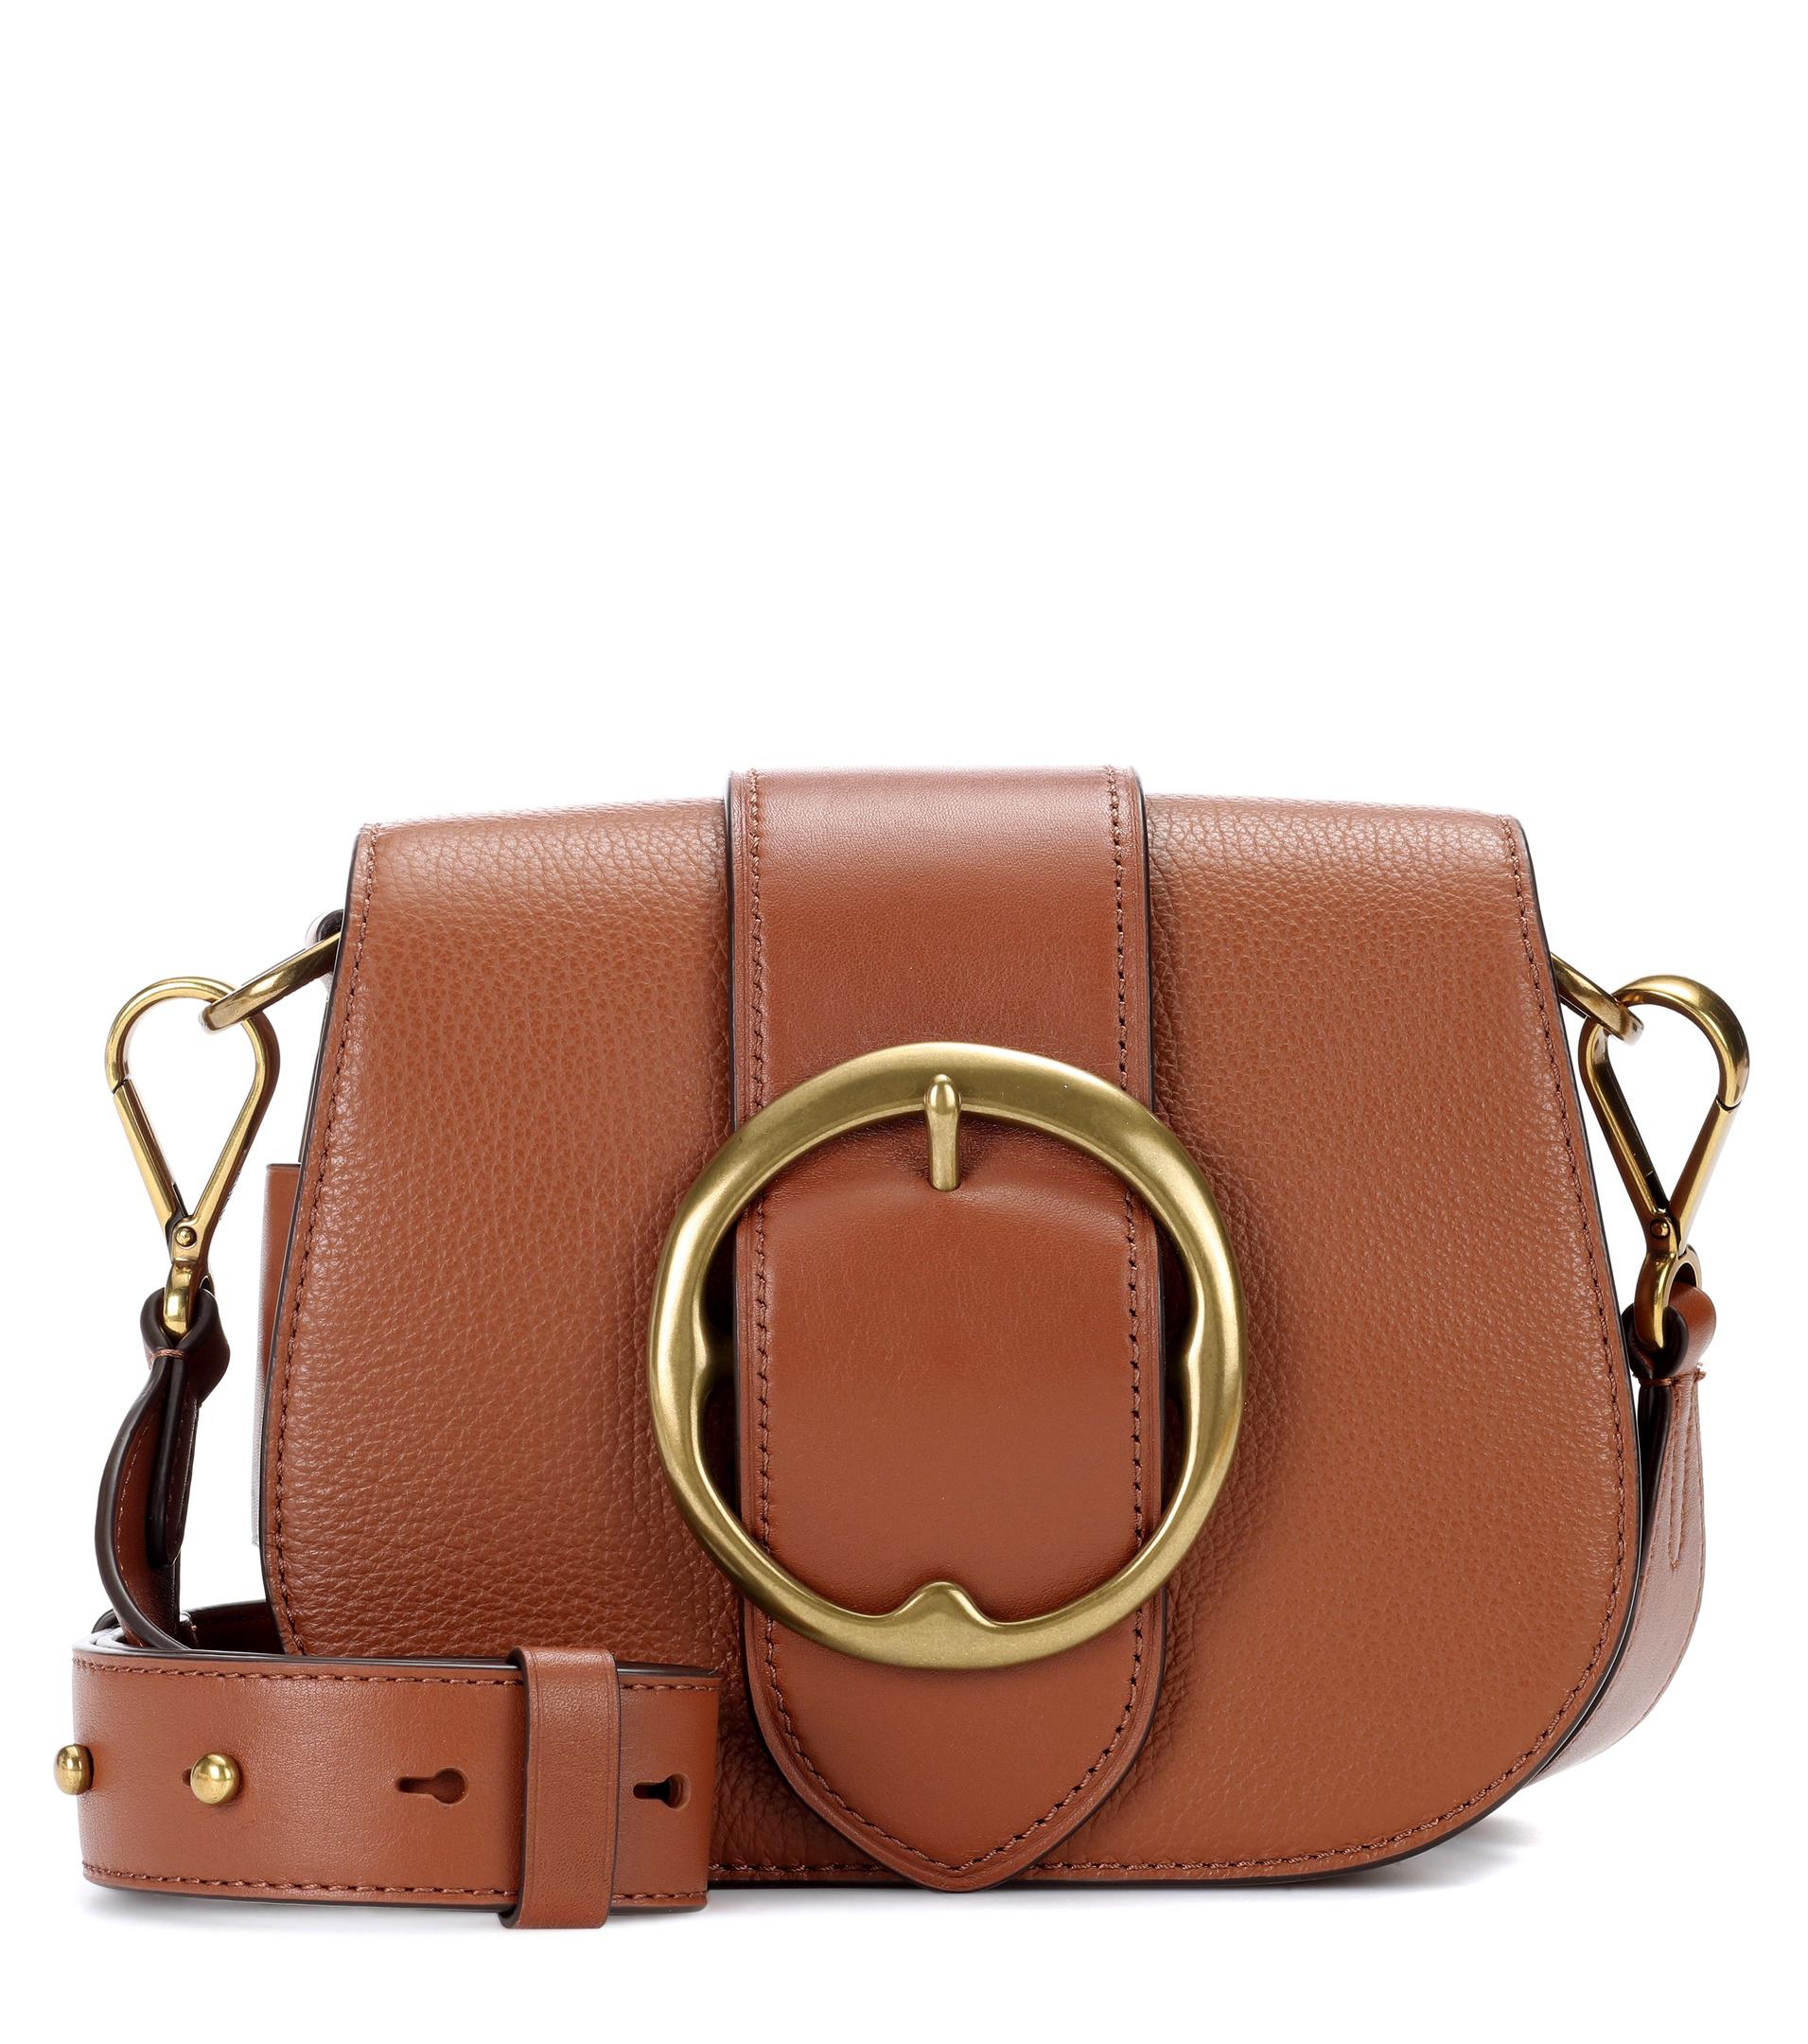 Polo Ralph Lauren Lennox Leather Shoulder Bag in Brown - Lyst